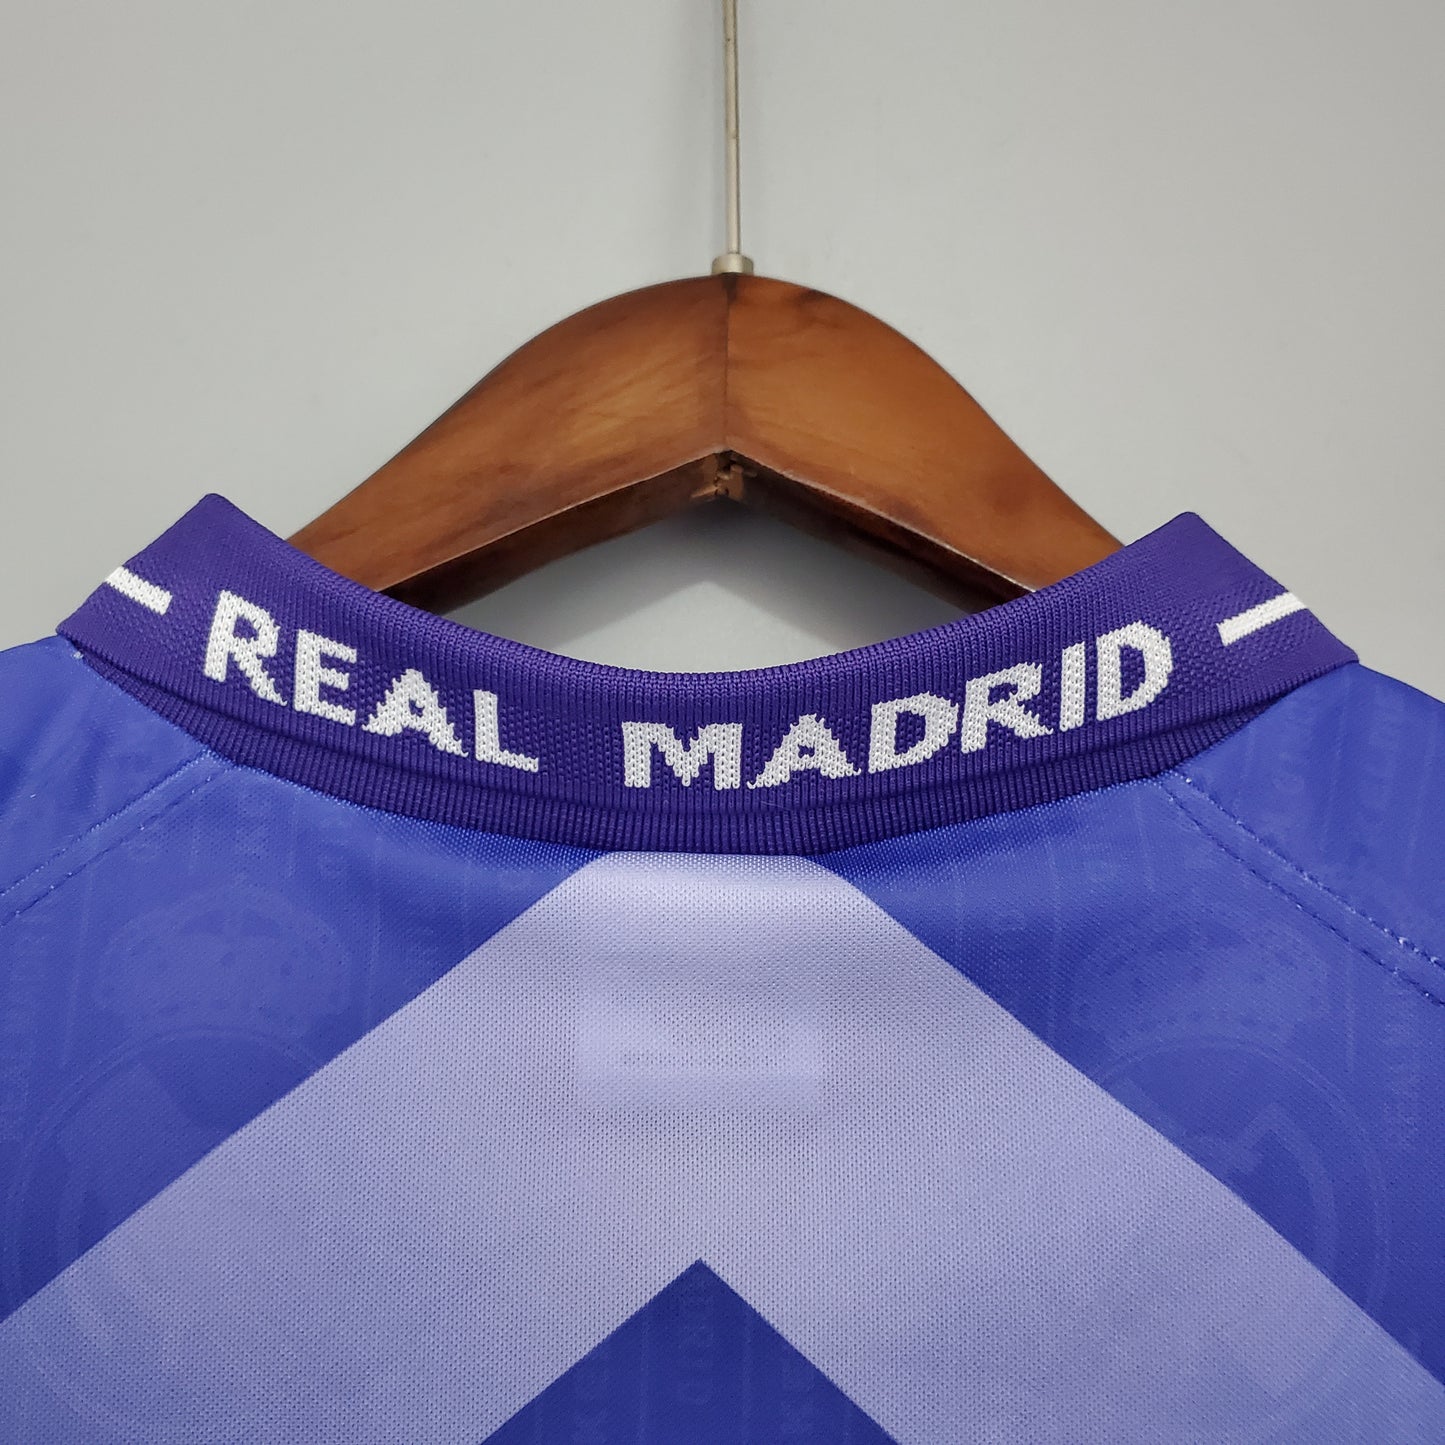 Camisa Retrô Real Madrid Away 1996/97